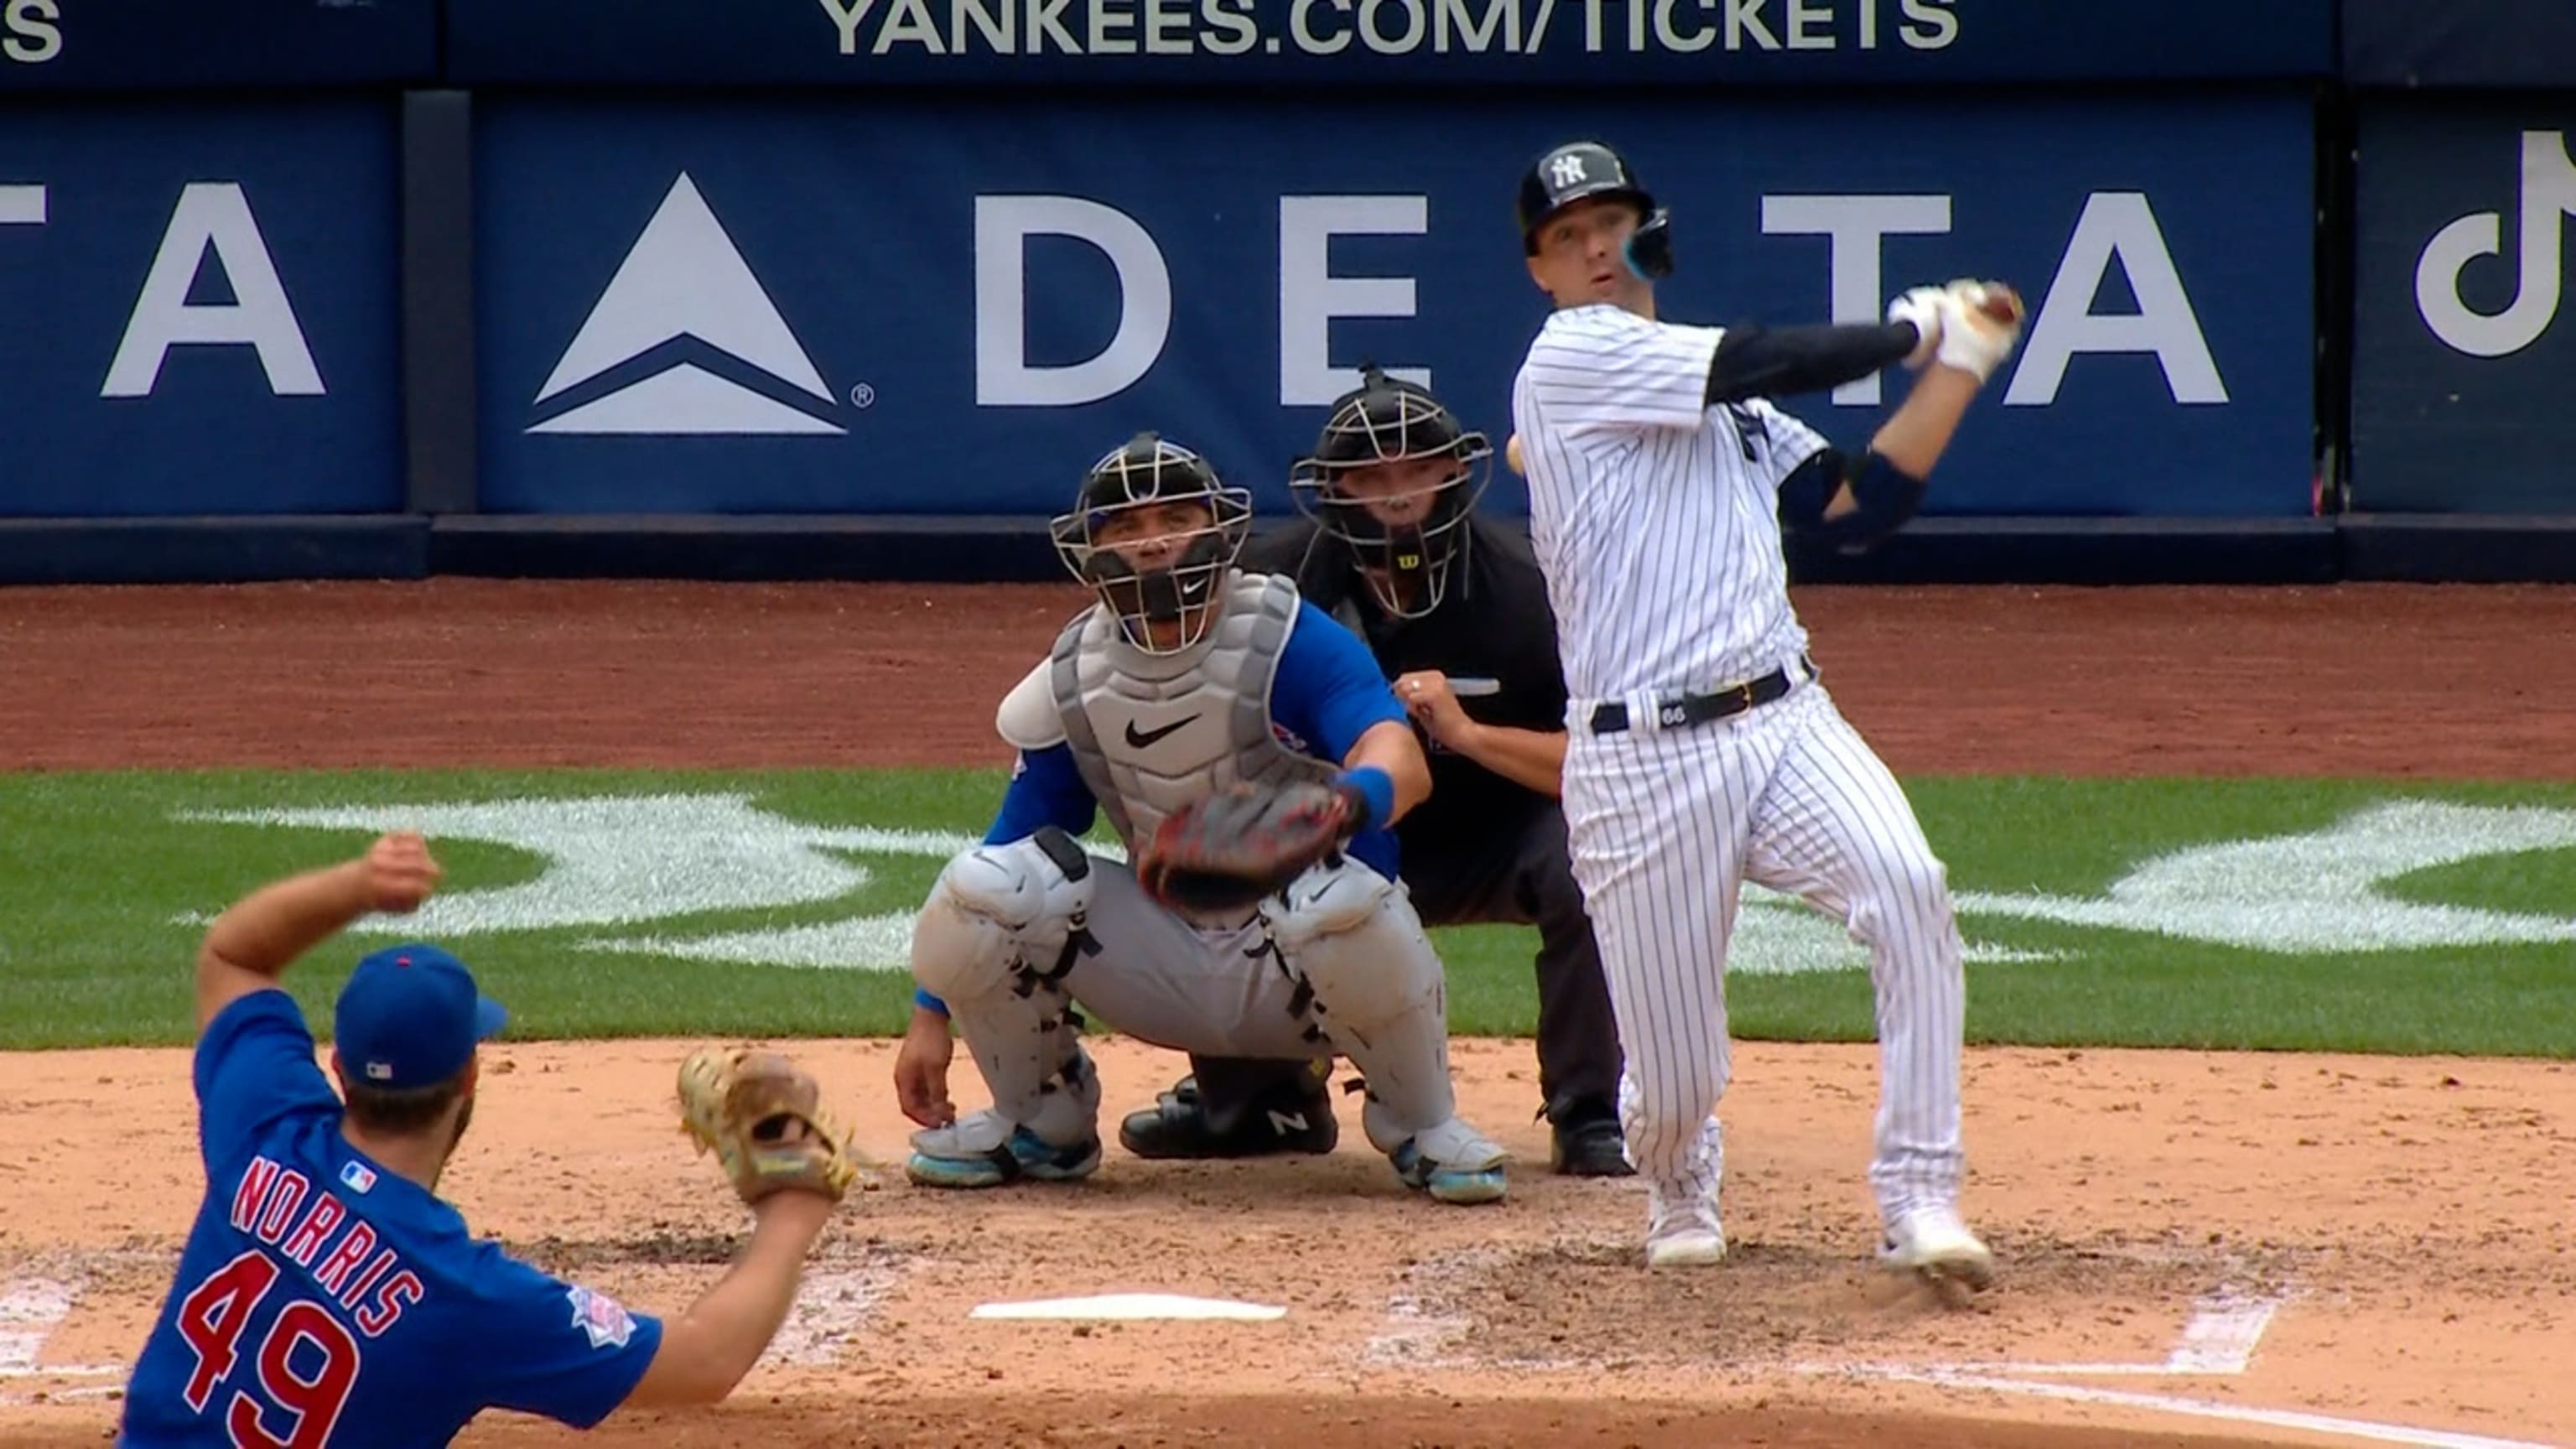 By day 2, Matt Carpenter already knows high-flying Yankees 'got